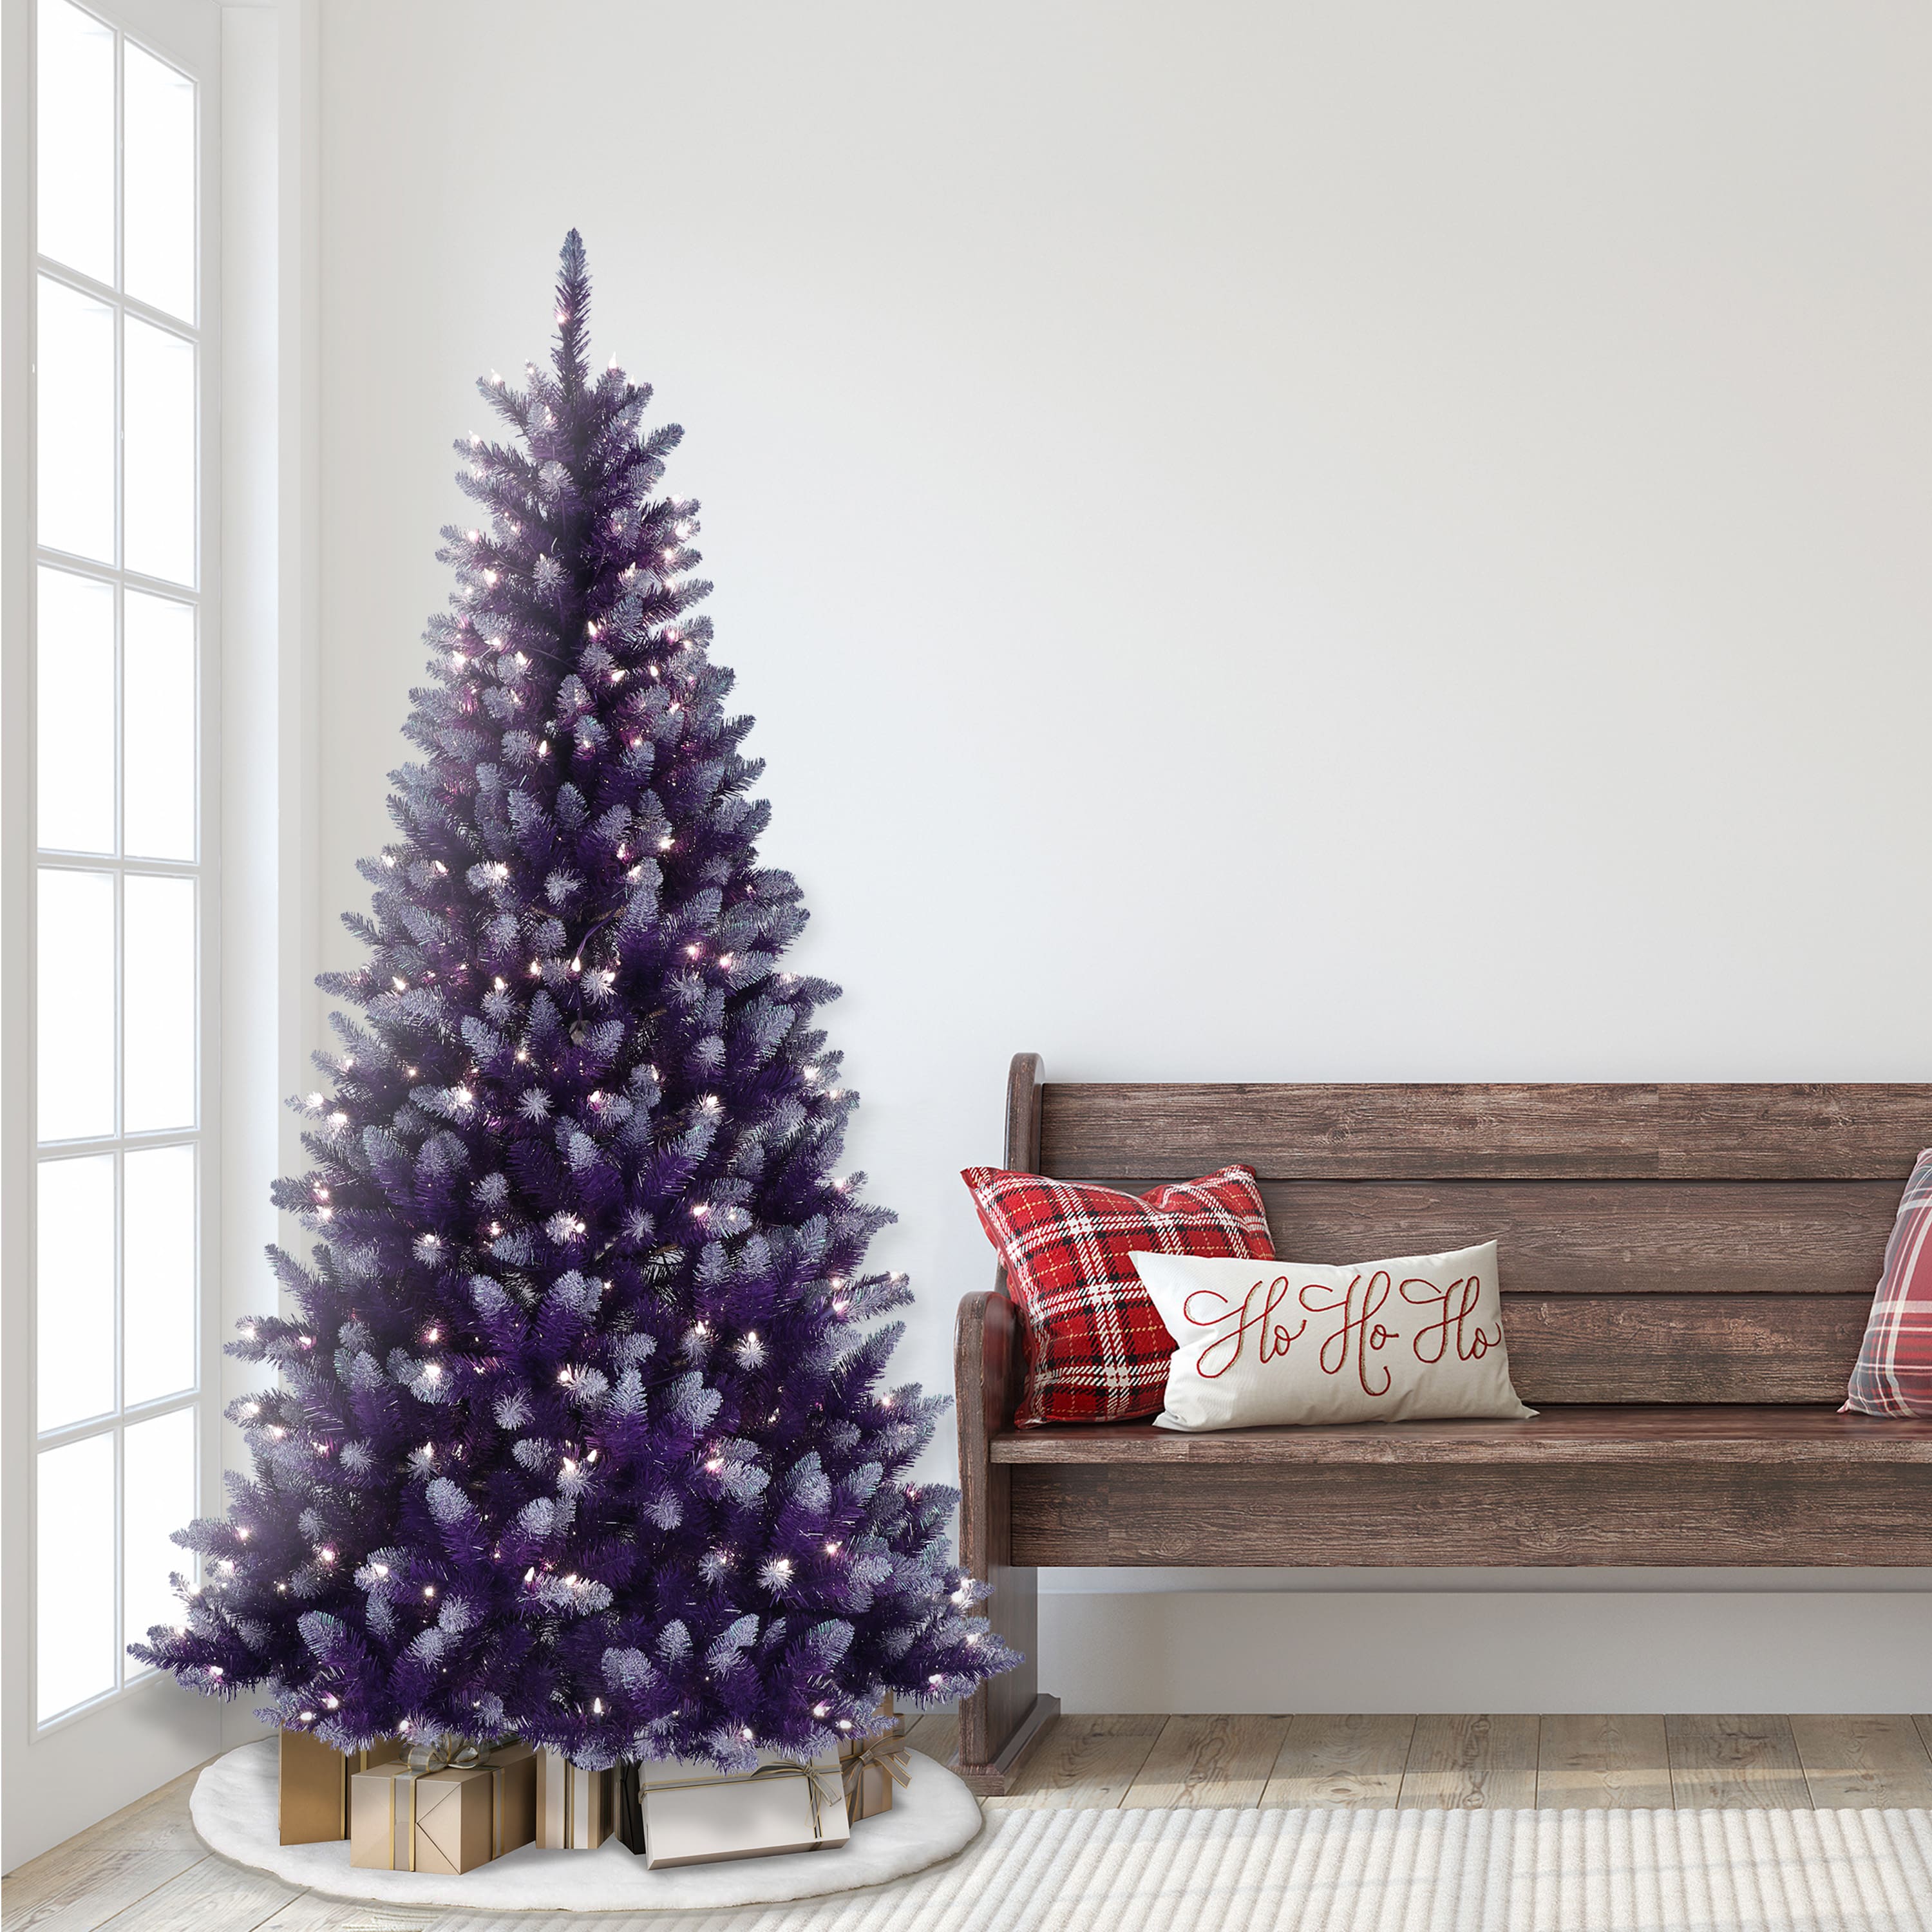 6.5ft. Pre-Lit Fashion Purple Artificial Christmas Tree, Clear Lights